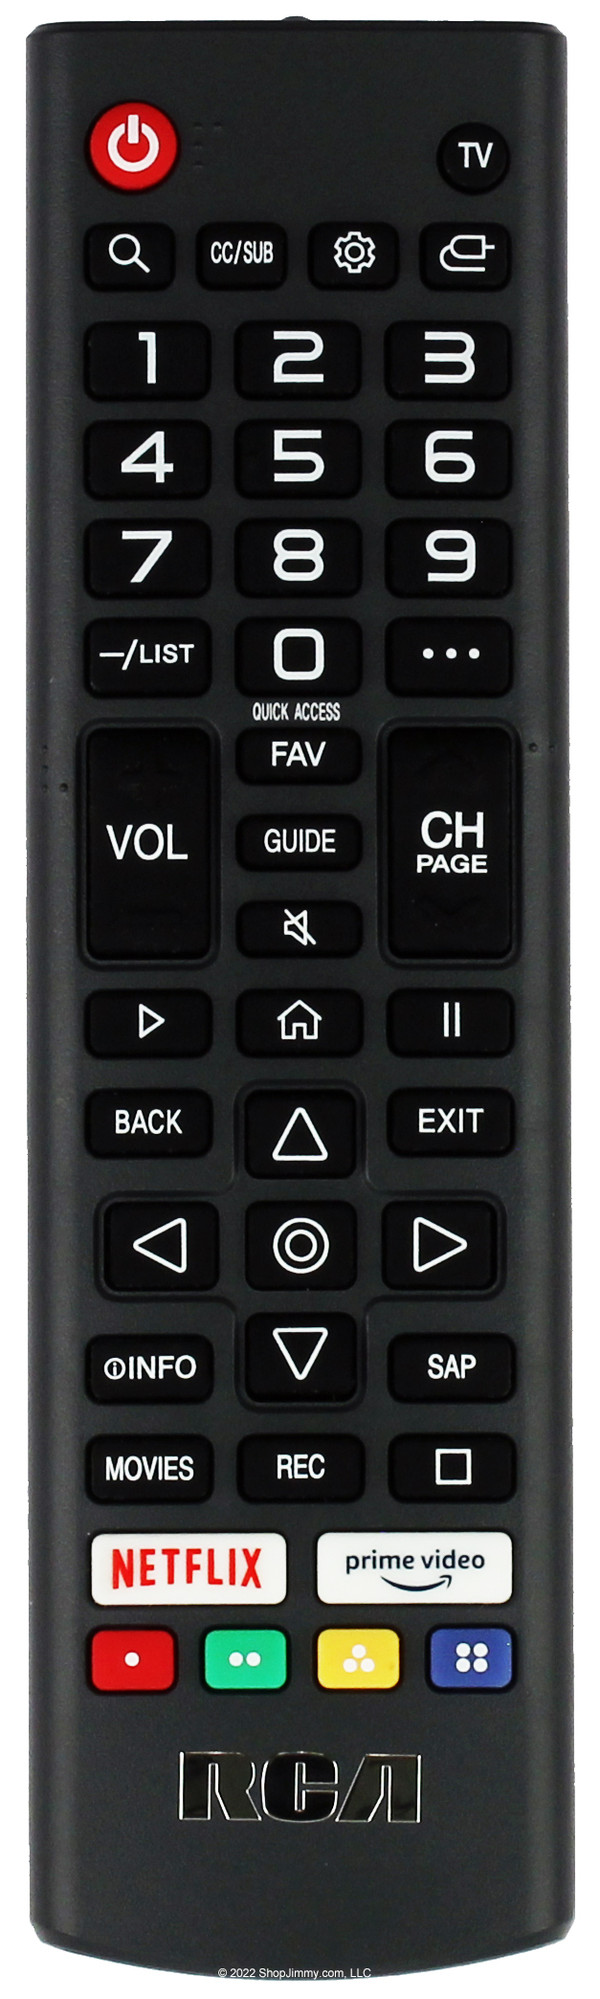 RCA Remote Control Version 12 RWOSU6547-B -- Open Bag